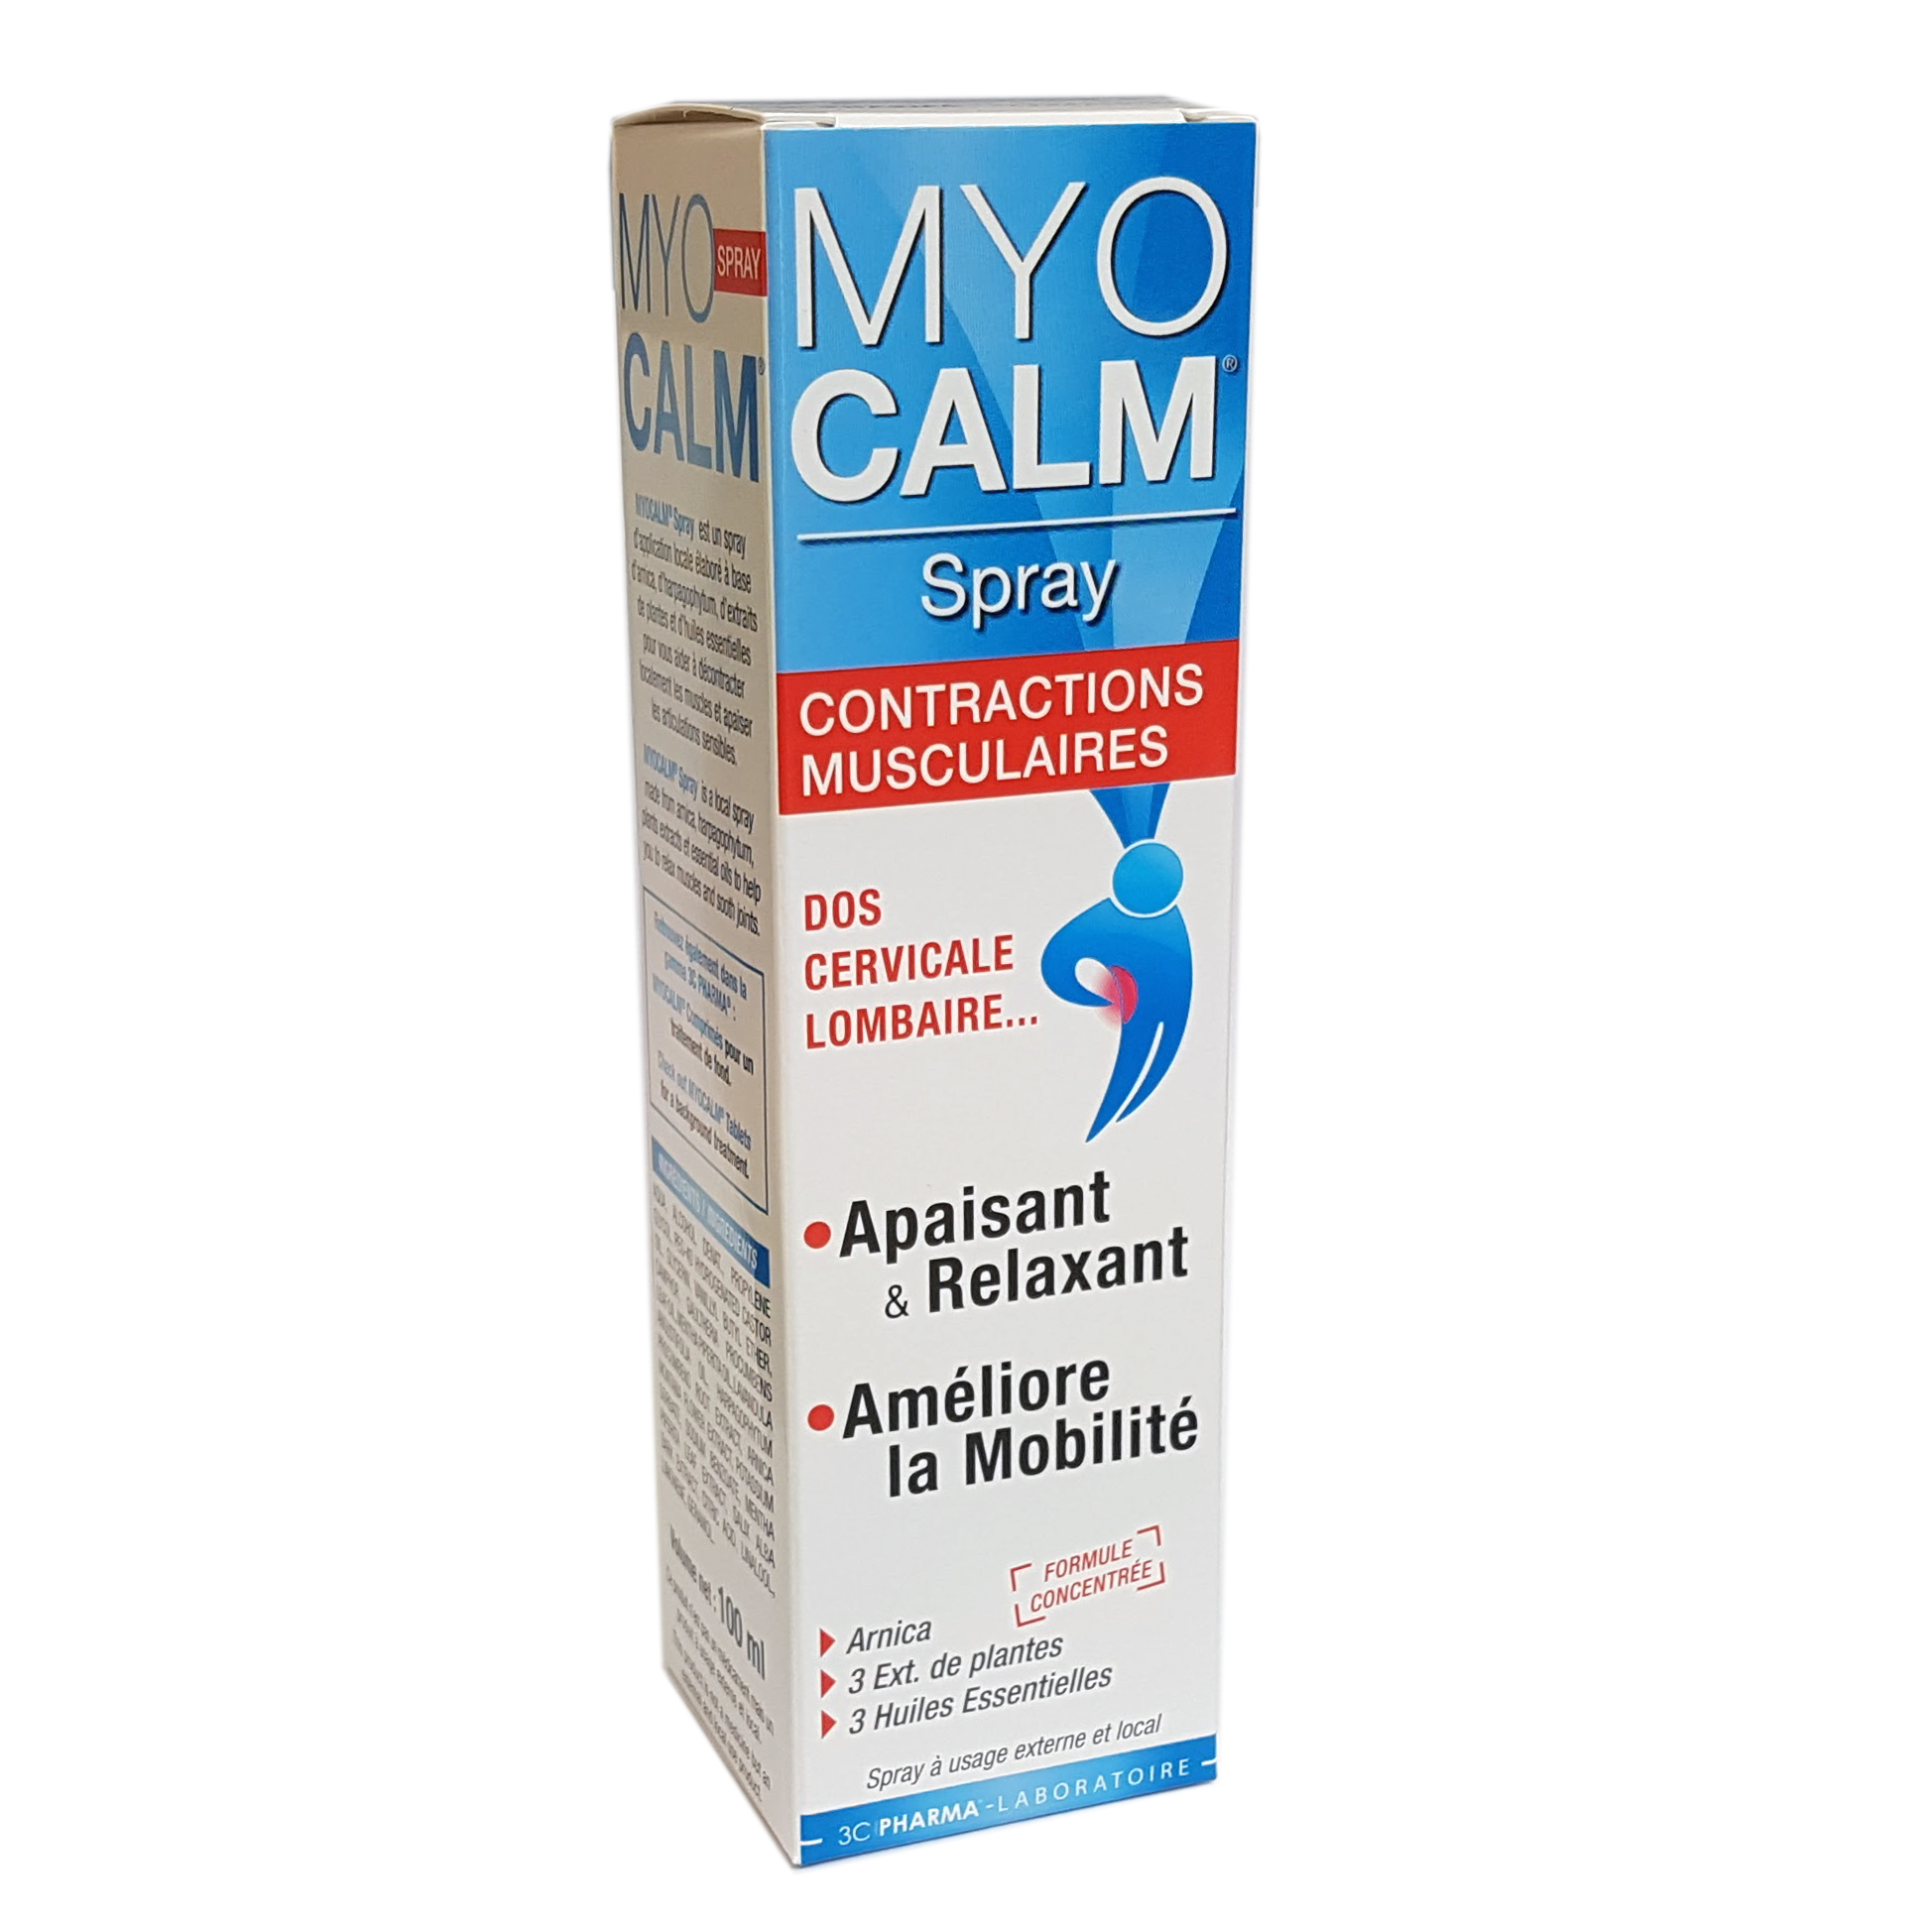 myocalm-spray-contractions-musculaires-3c-pharma-59baa9c16bff0